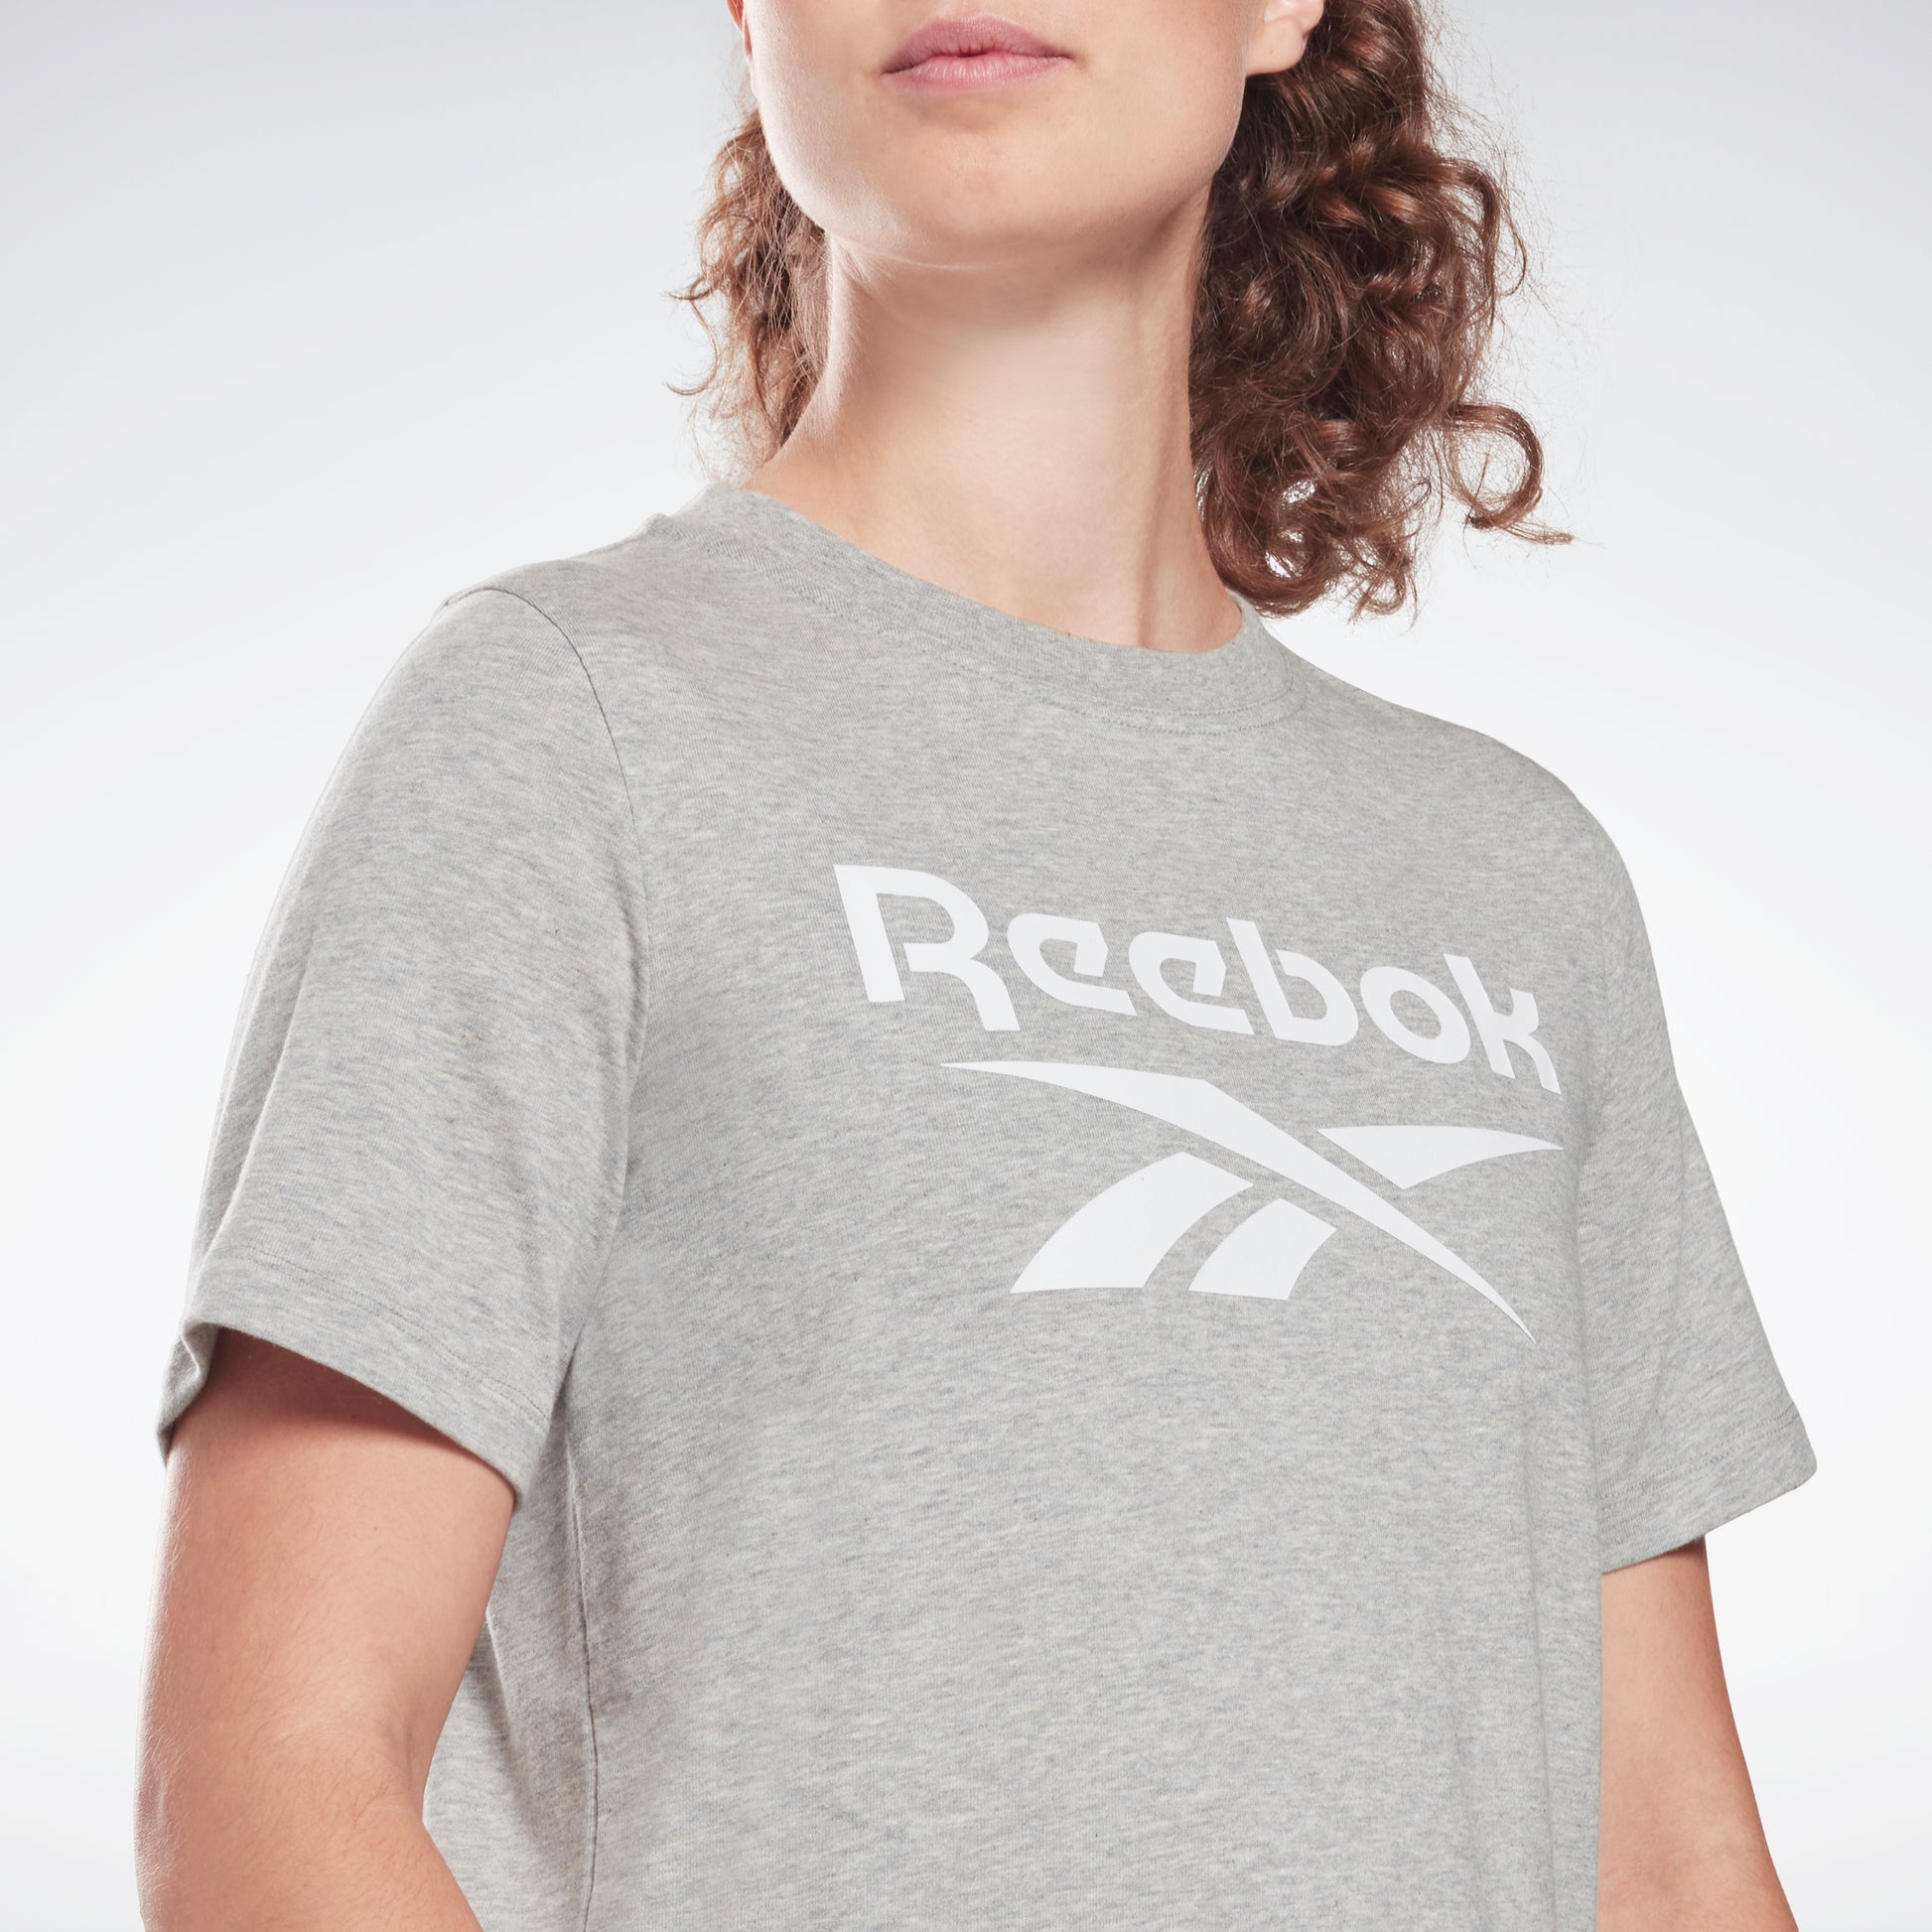 Grey Reebok Identity T-Shirt Australia Heather – Medium Reebok